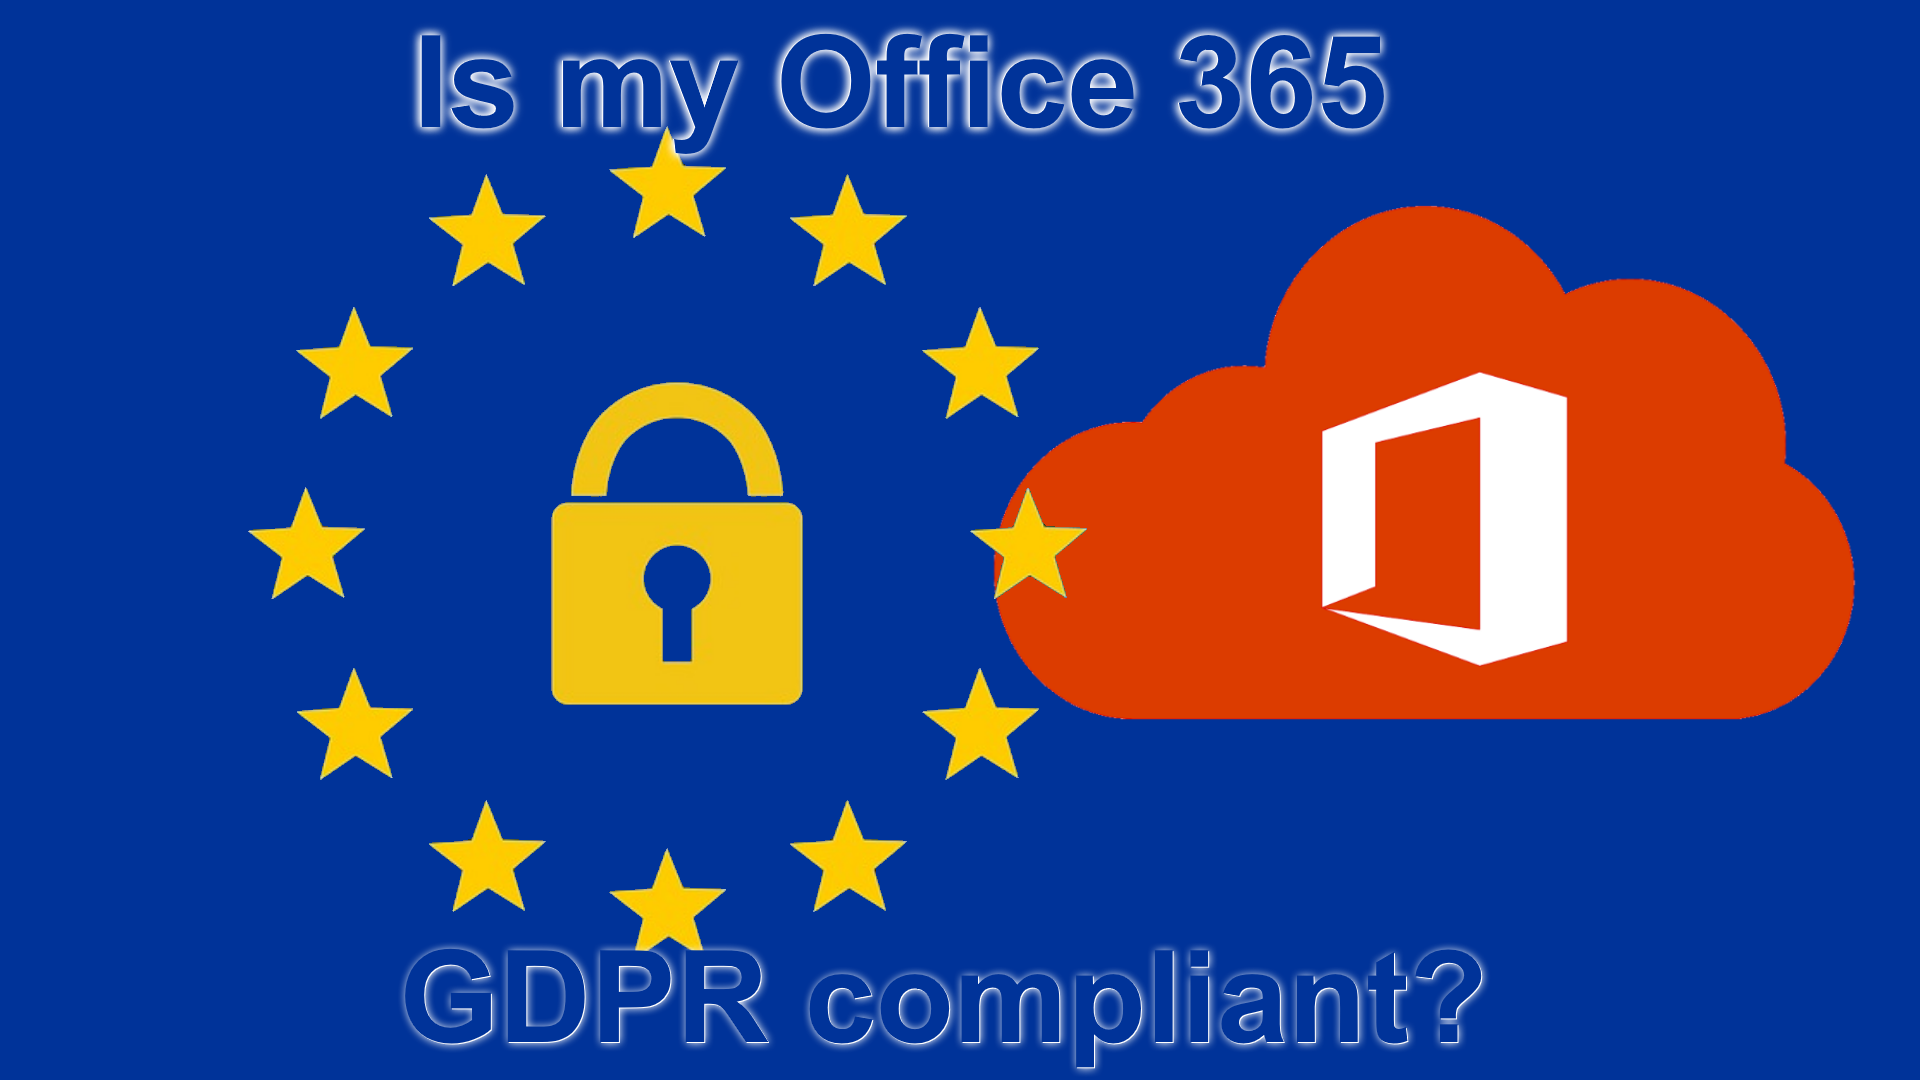 Is my Office 365 GDPR compliant?